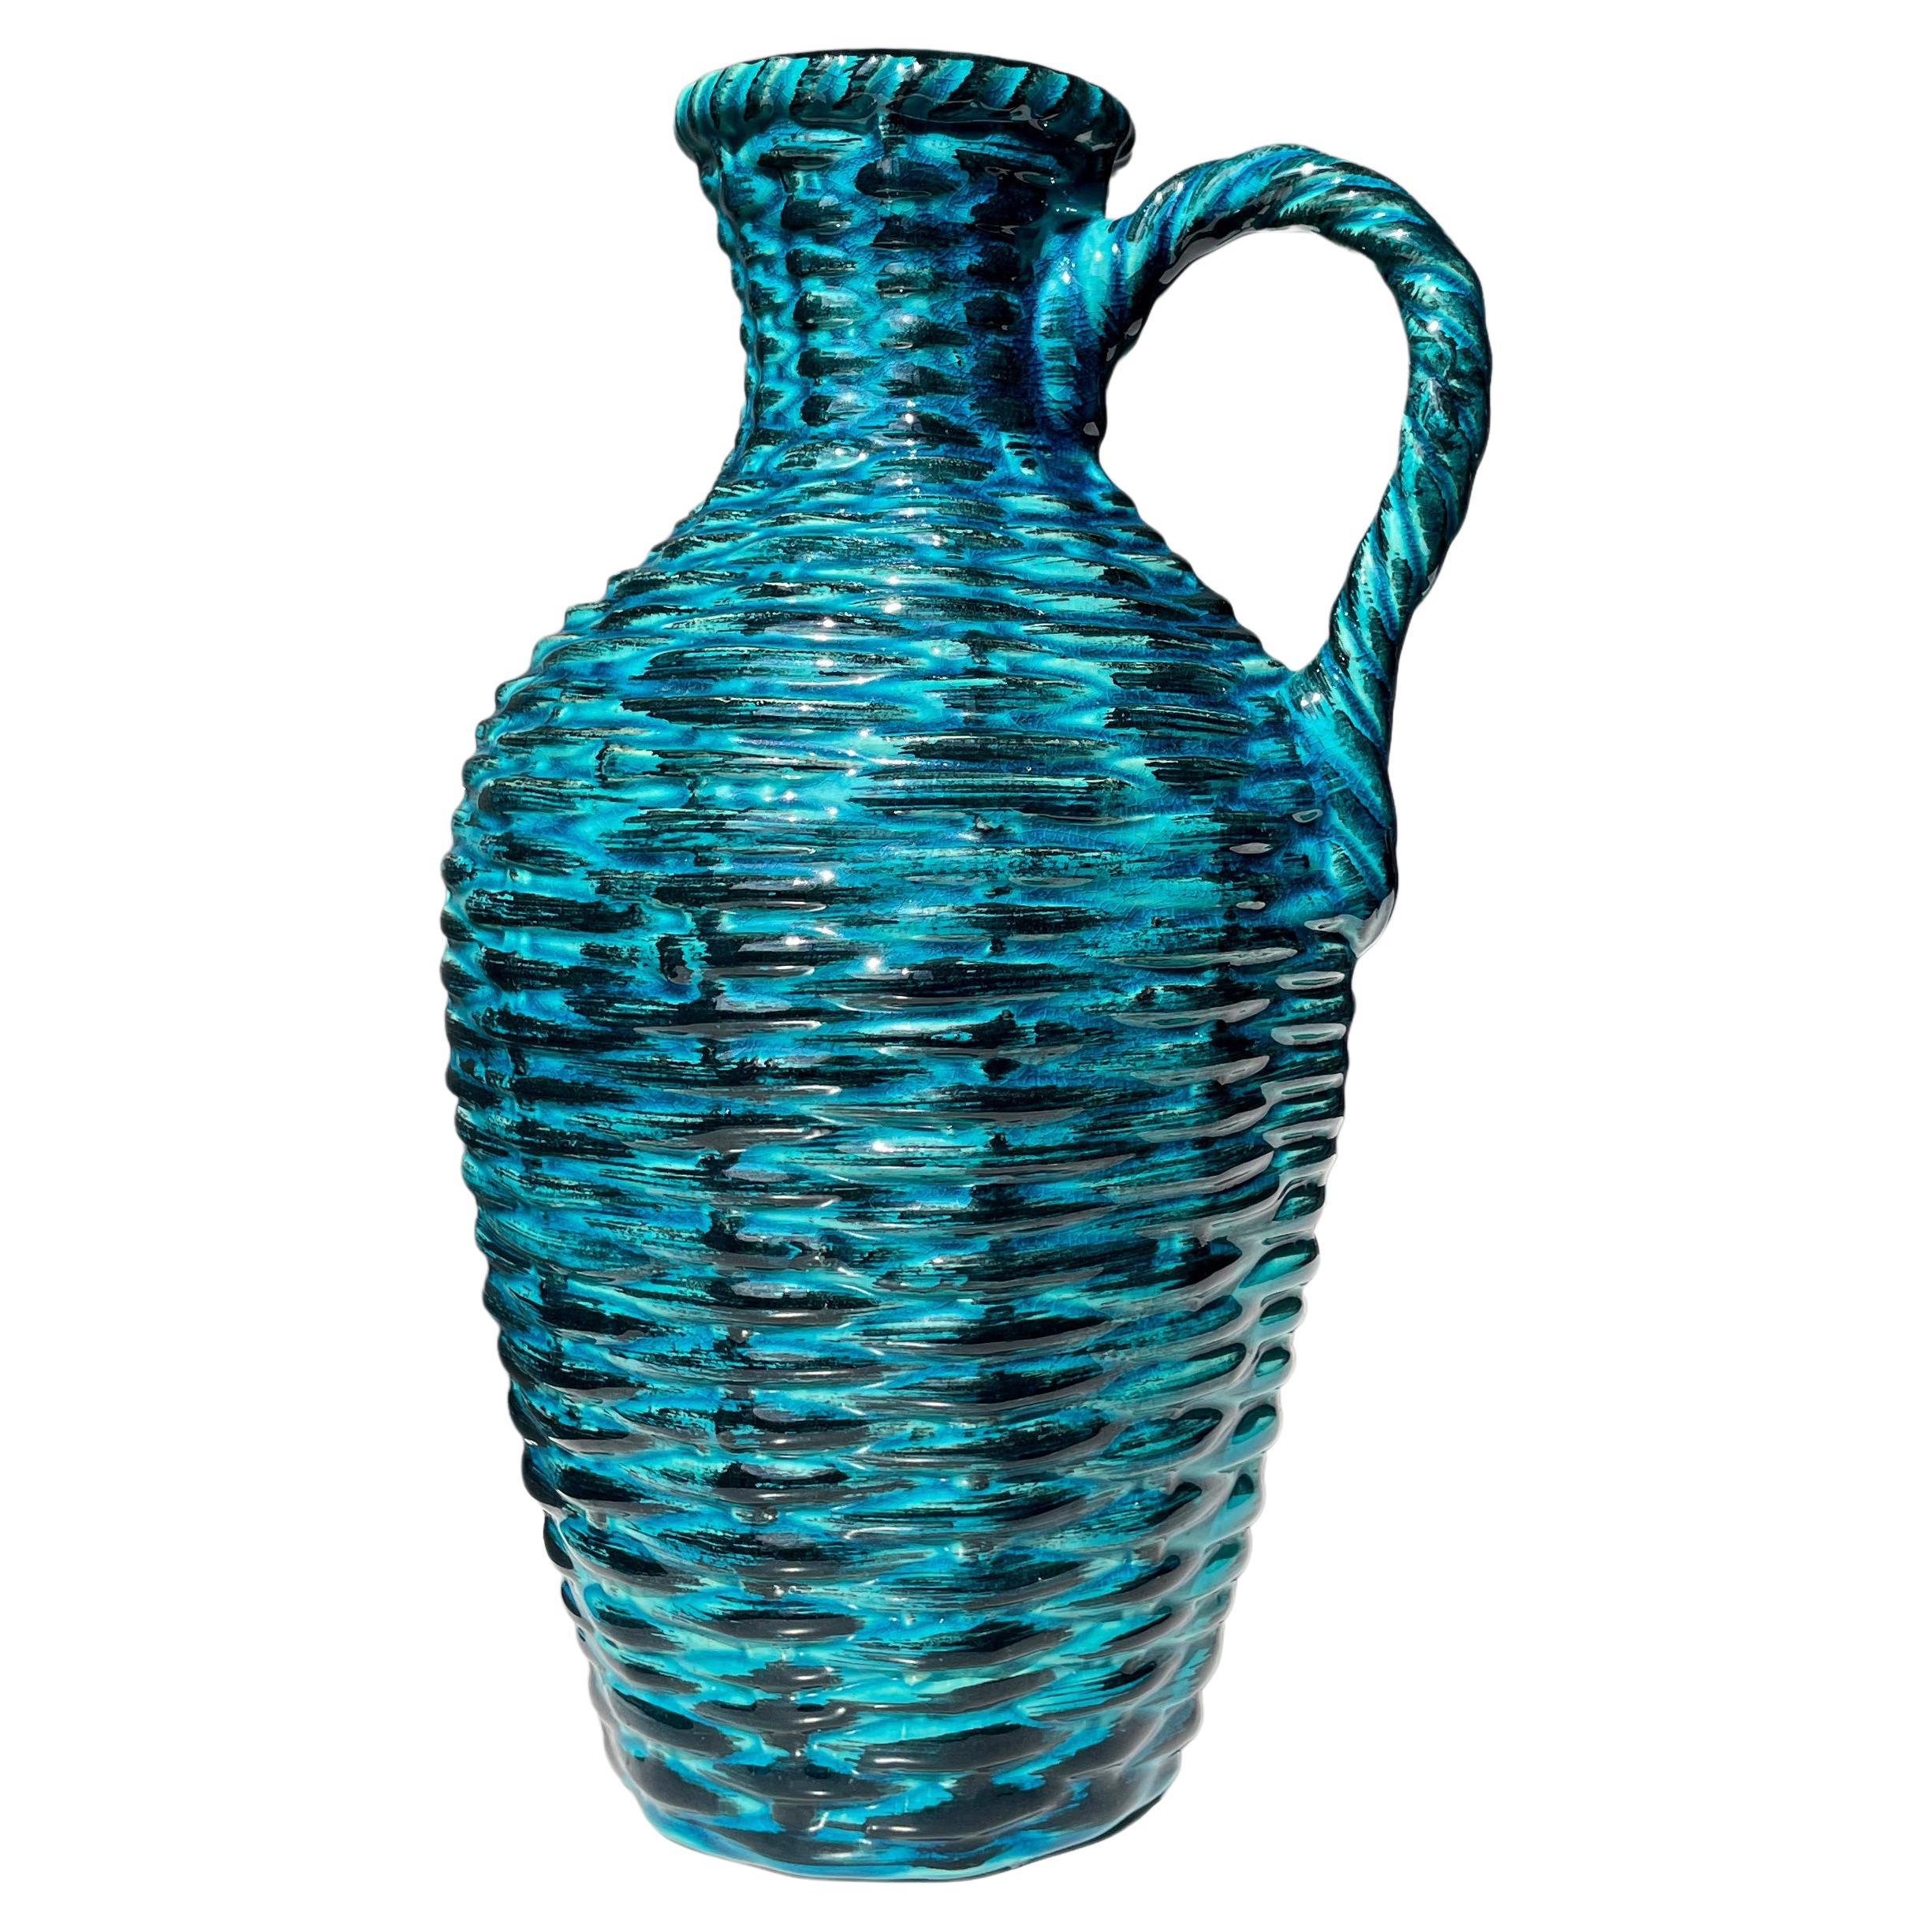 Tall 1970s Petrol, Black Braided Textured Bay Keramik Vase